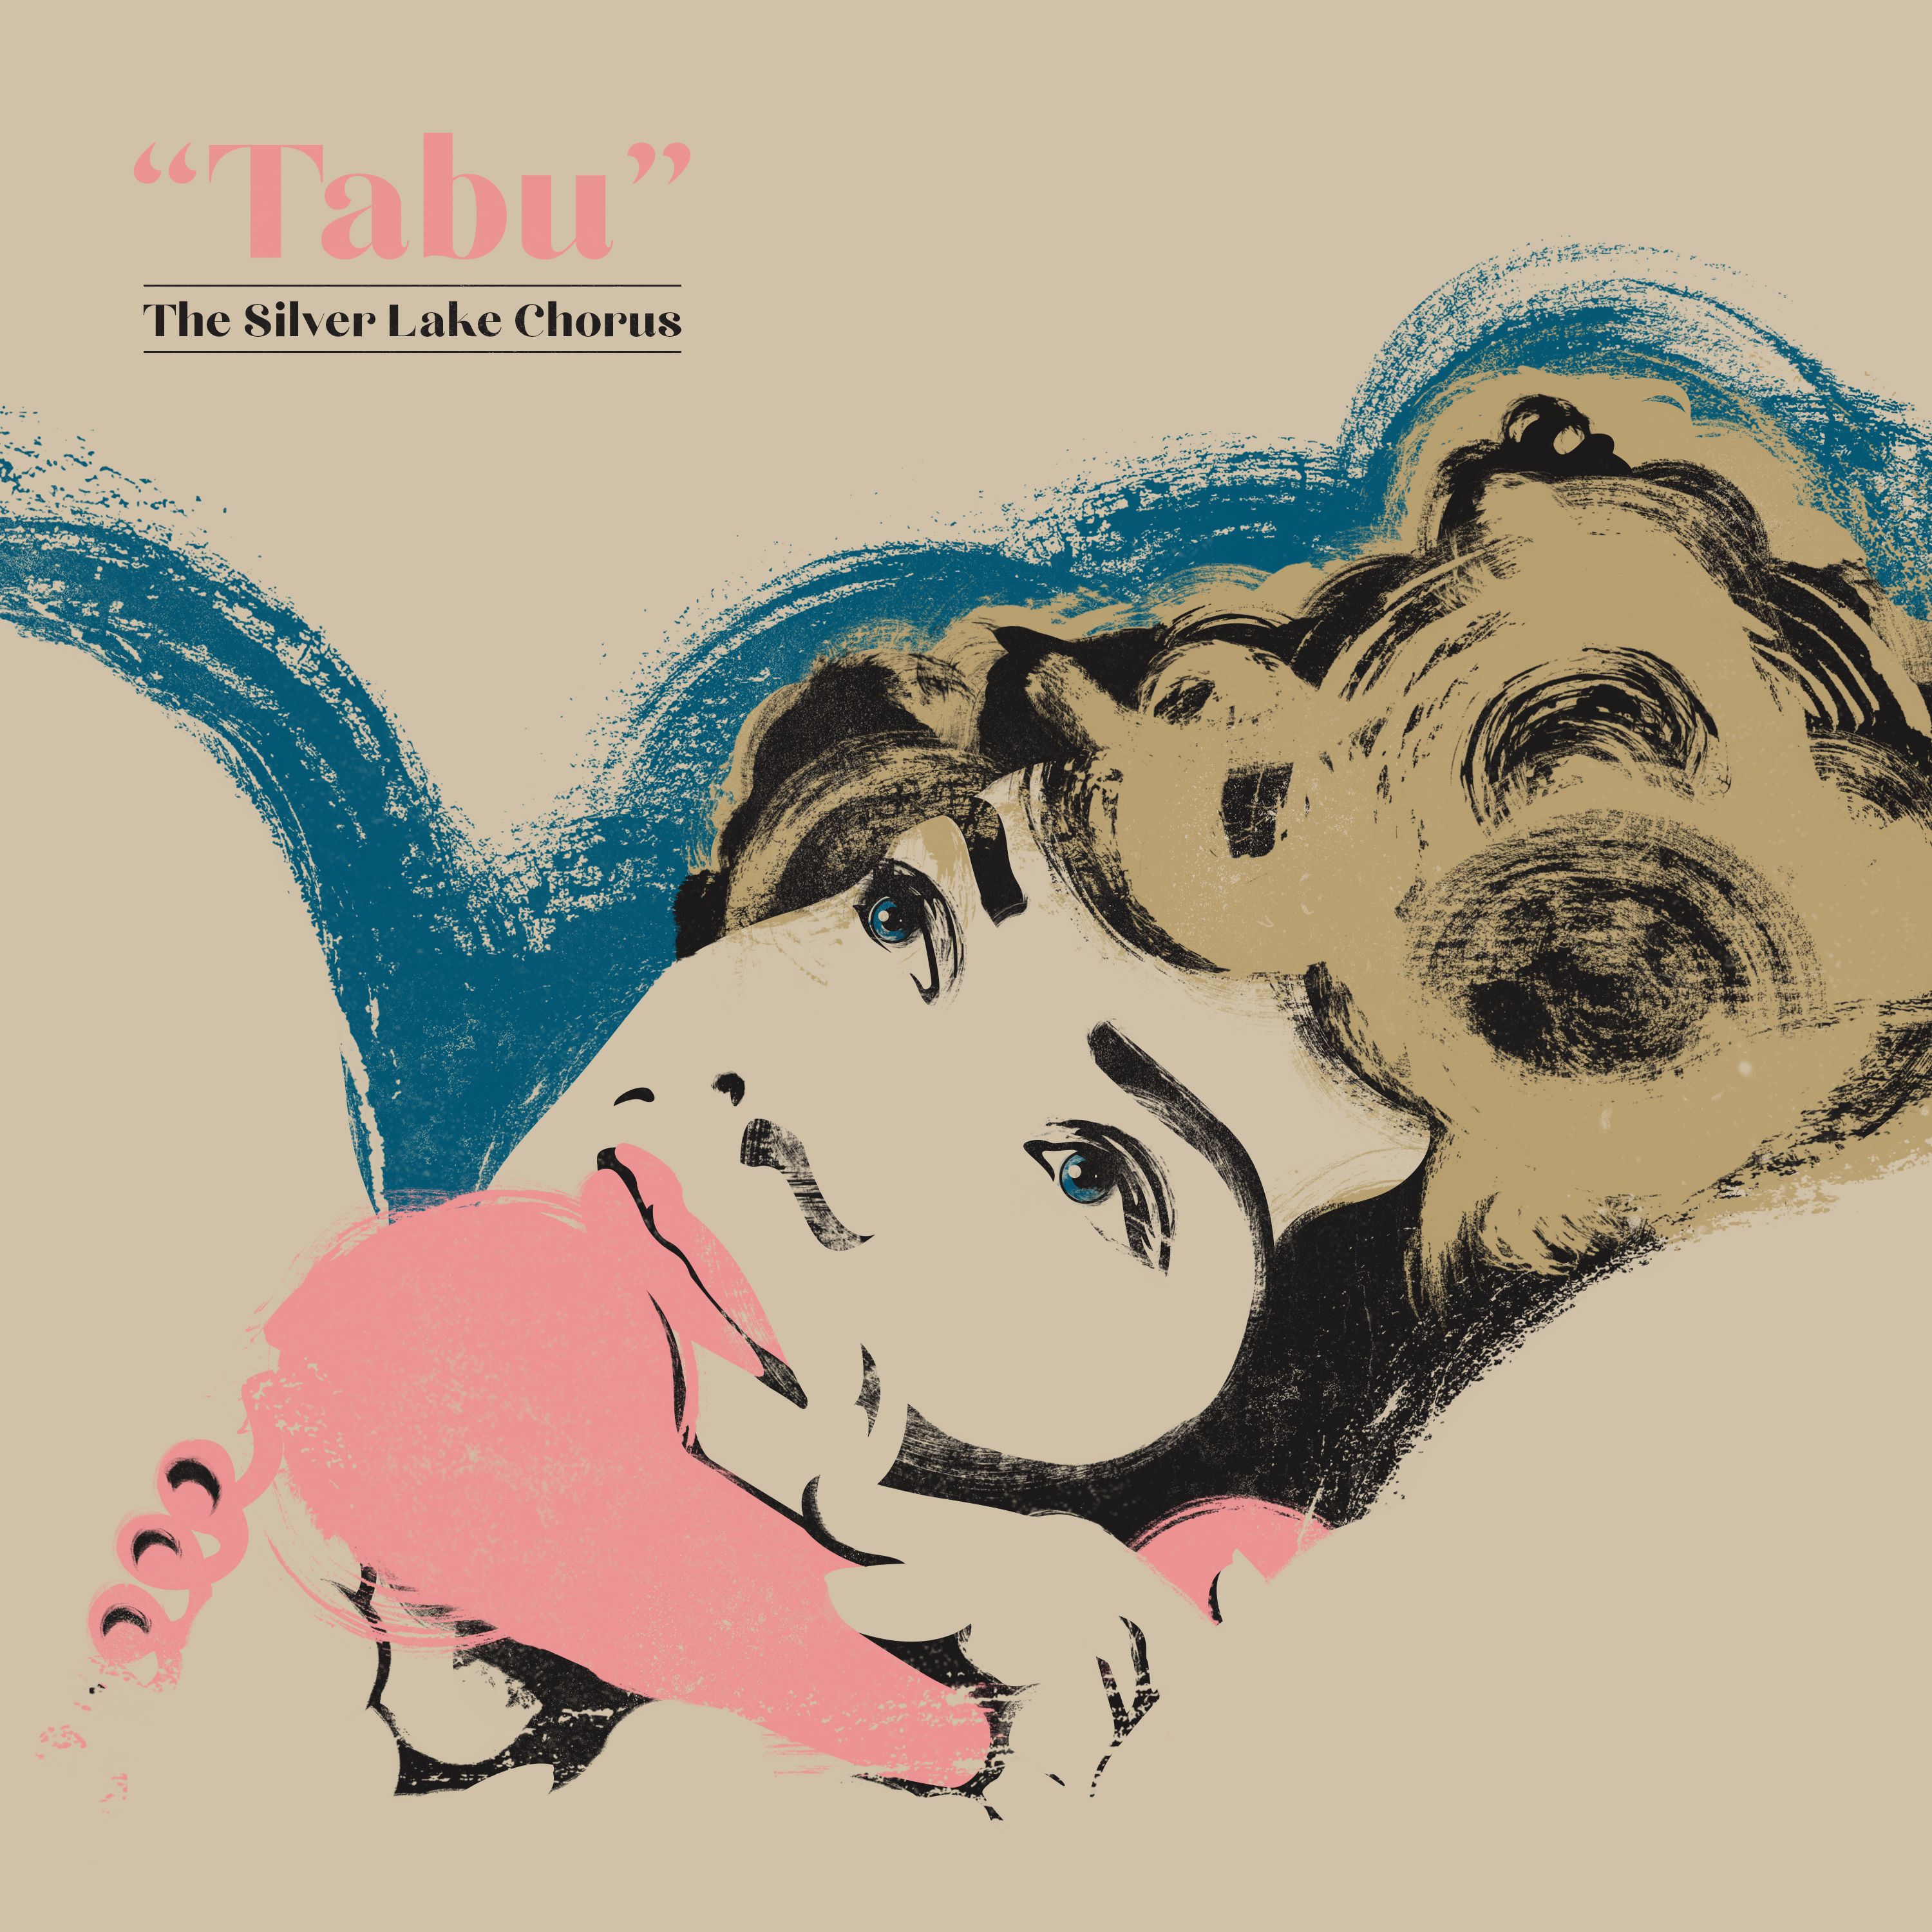 The Silver Lake Chorus – “Tabu”